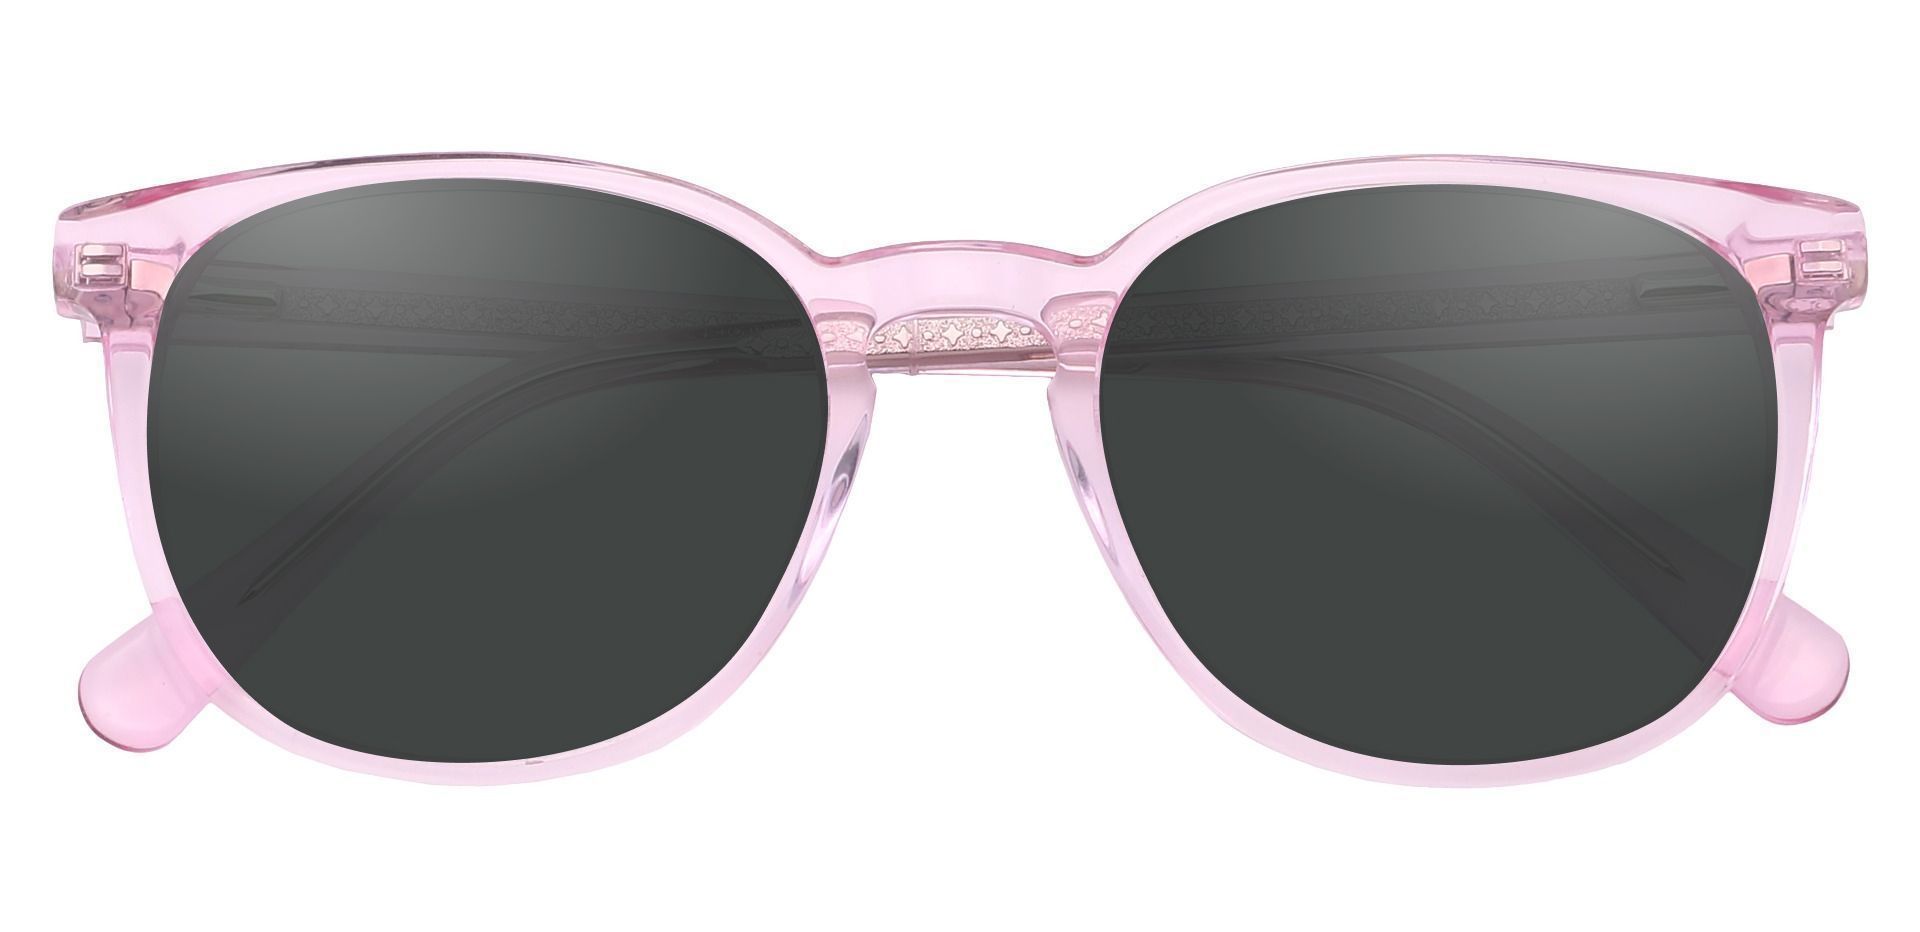 Nebula Round Reading Sunglasses - Pink Frame With Gray Lenses